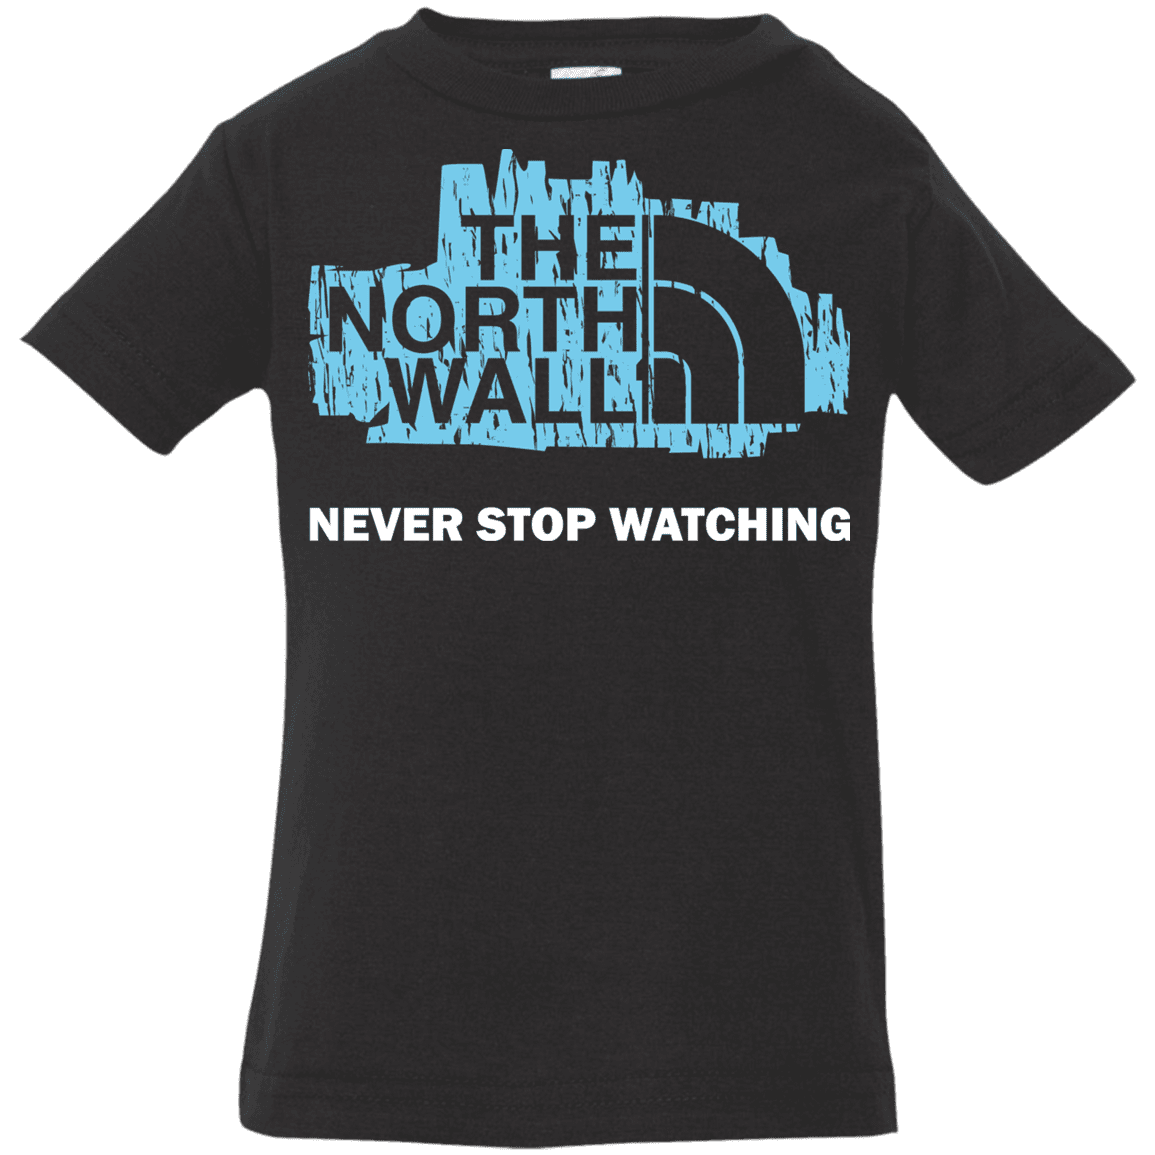 T-Shirts Black / 6 Months The North Wall Infant Premium T-Shirt